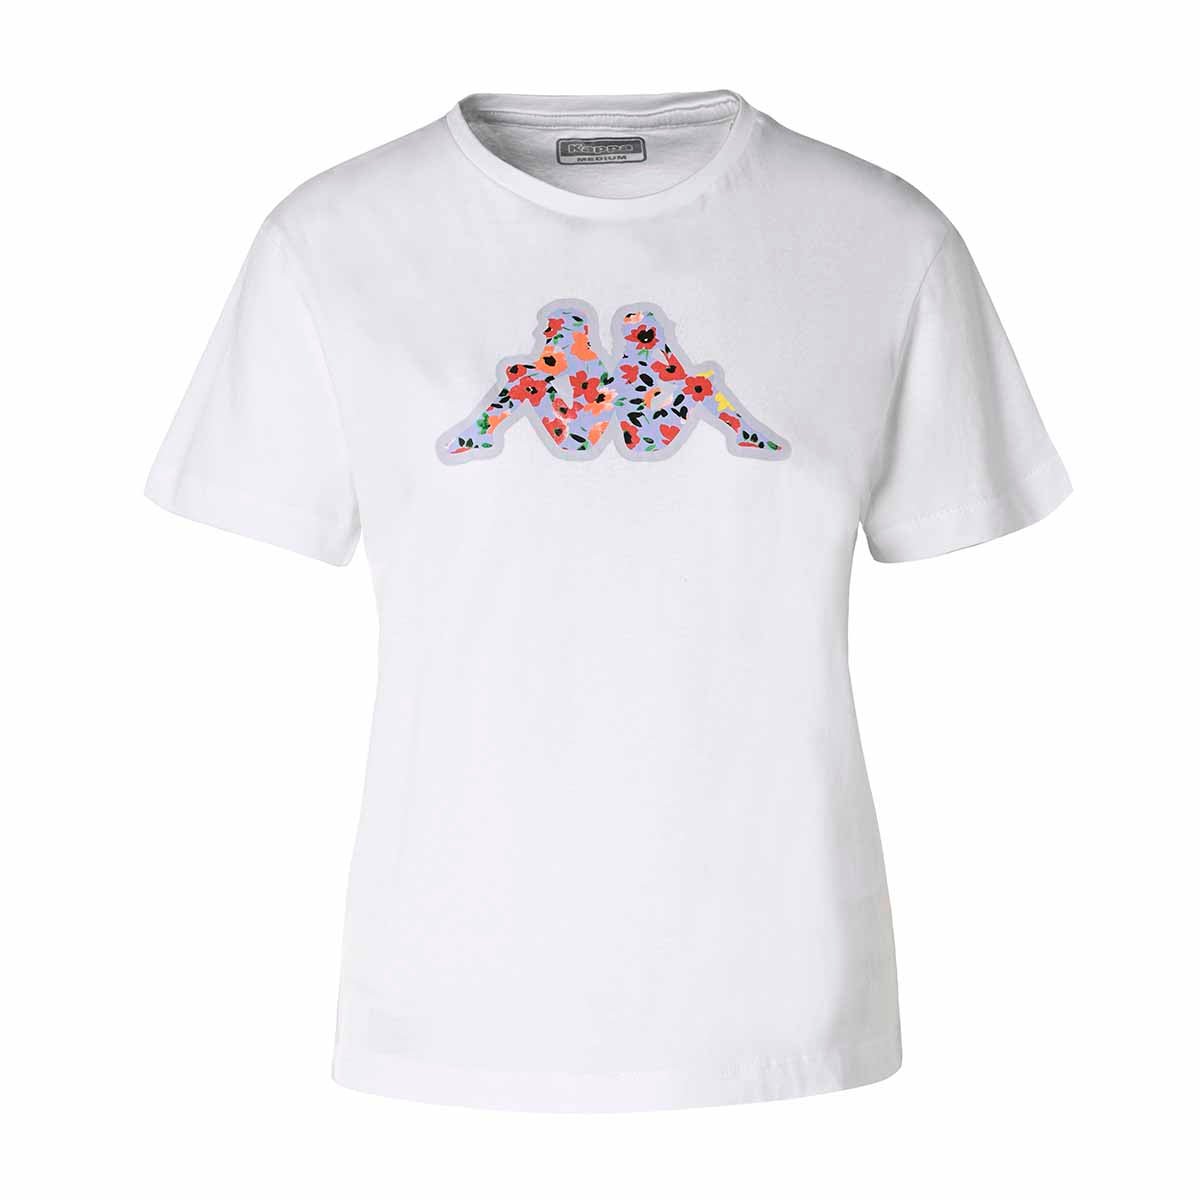 T-shirt Emilia Blanc Femme